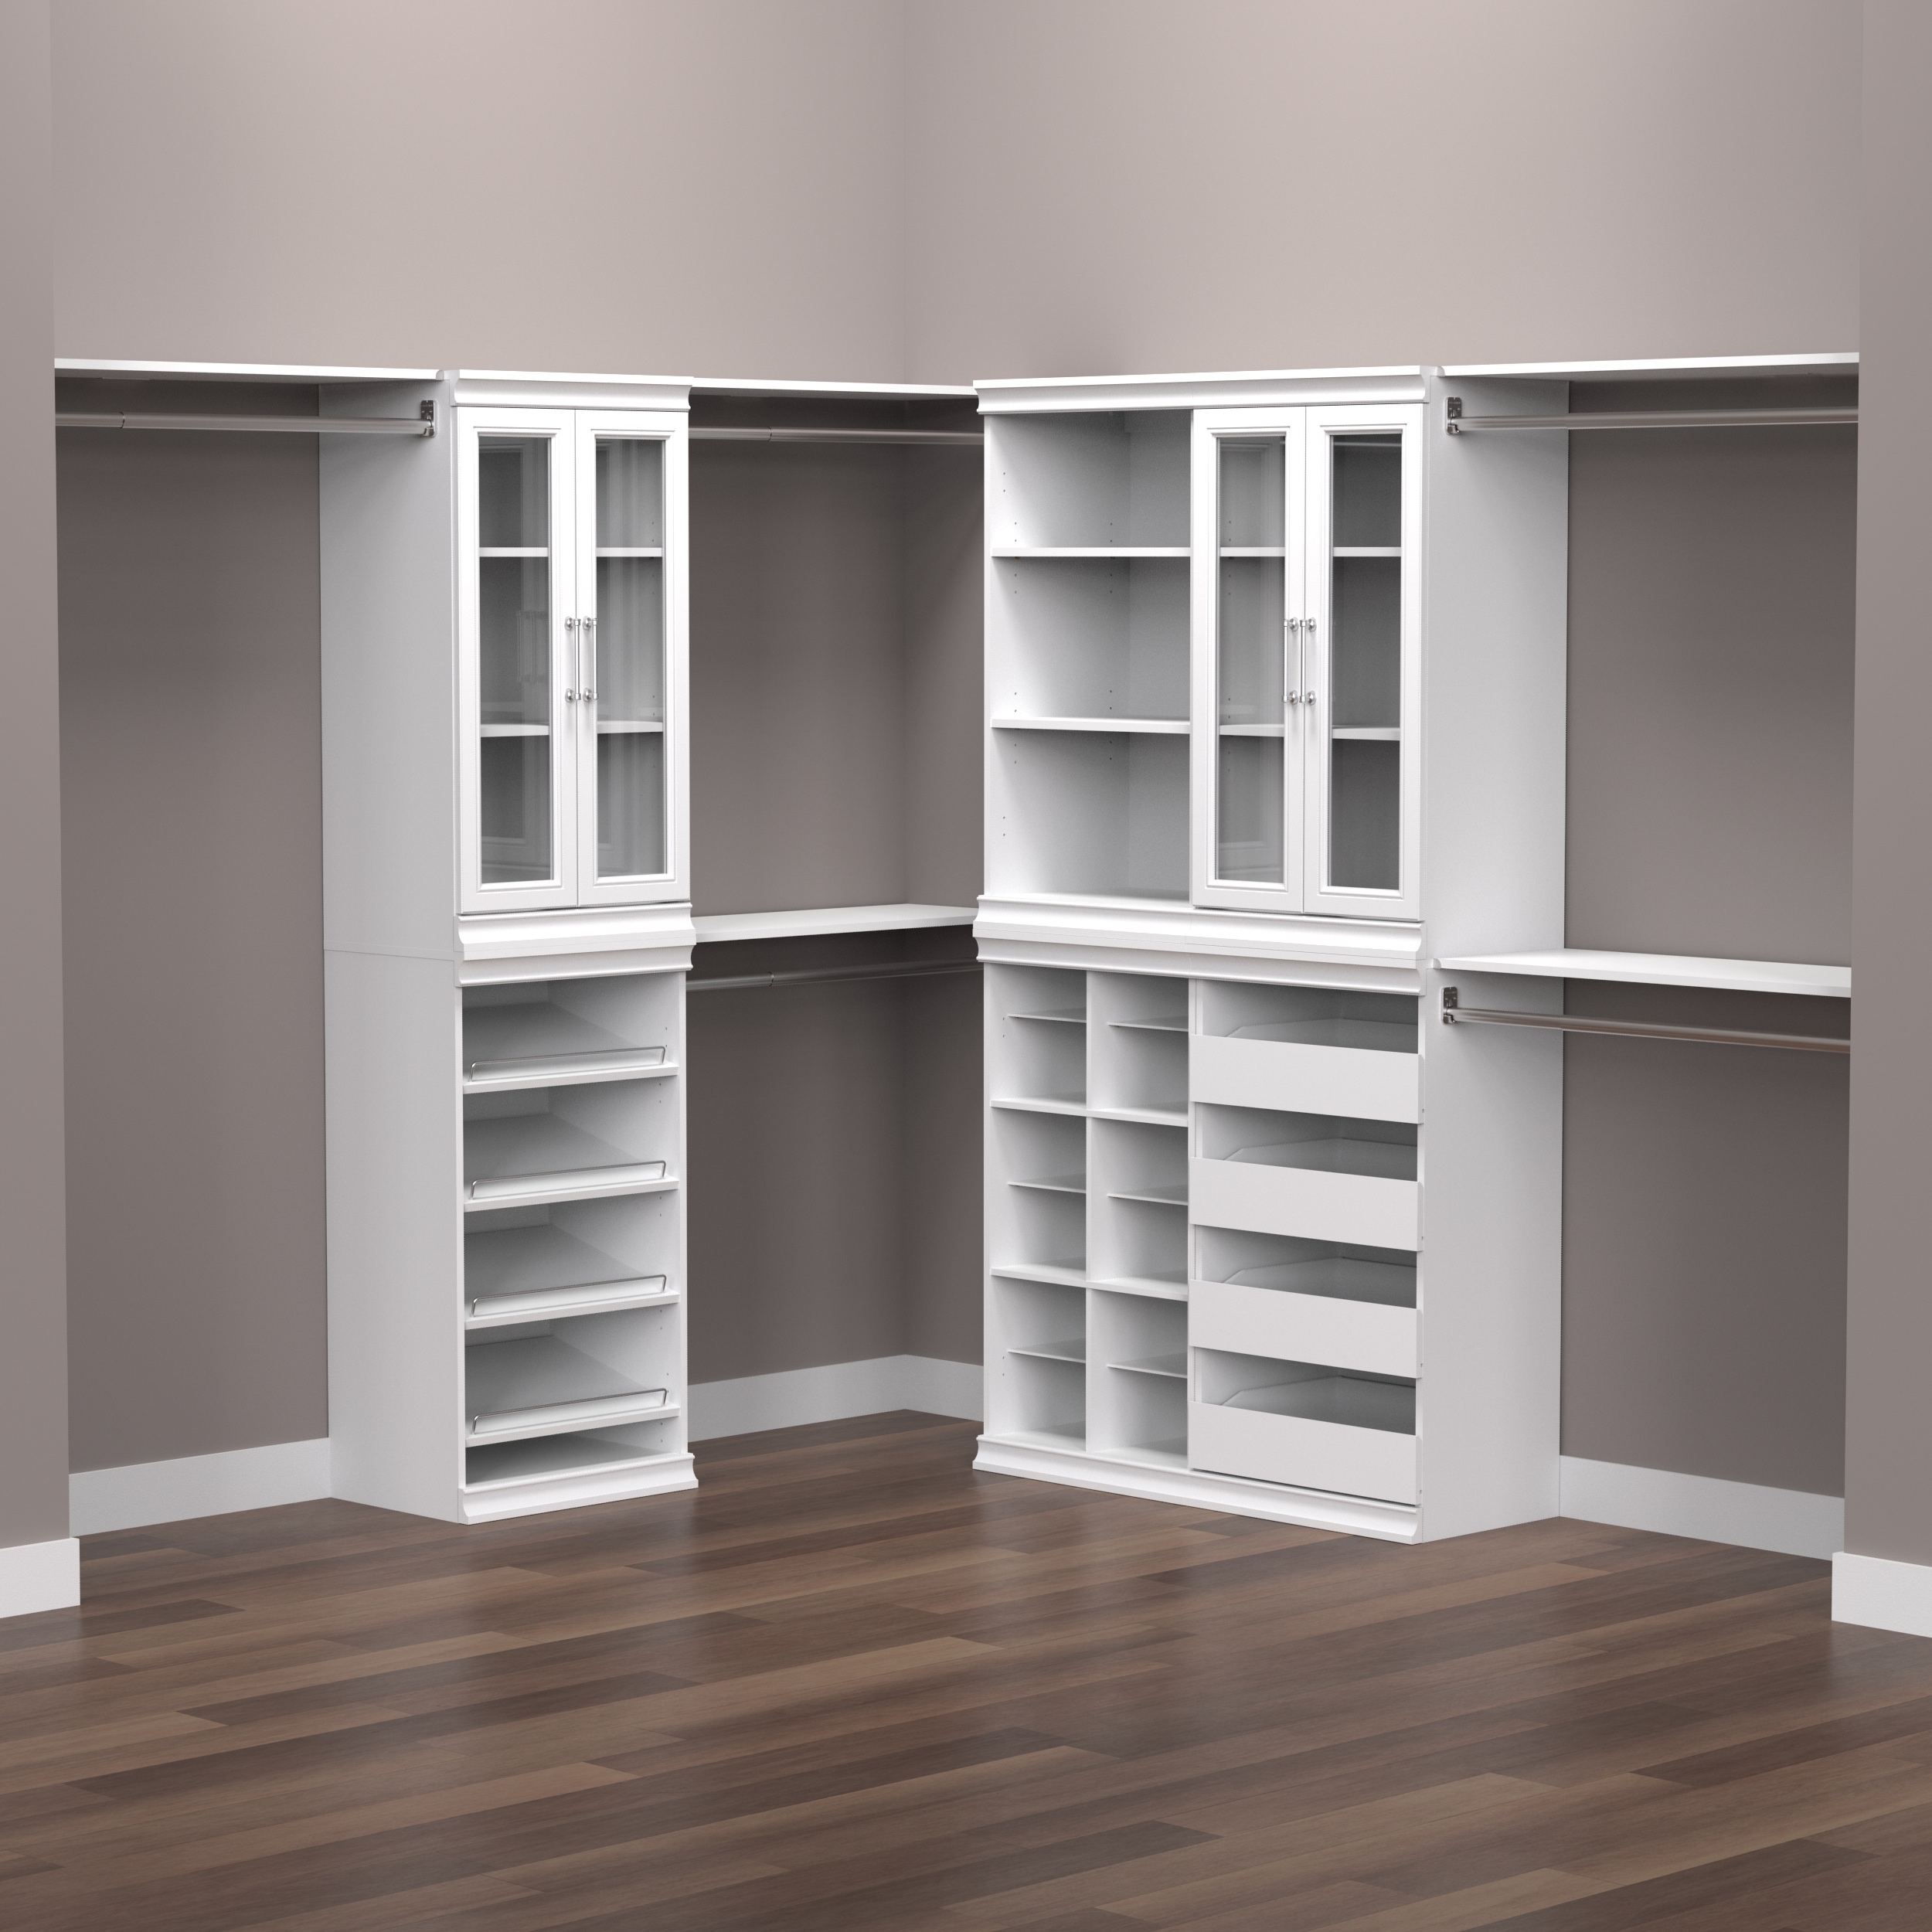 ClosetMaid Modular Storage Top Shelf & Hang Rod Kit - On Sale